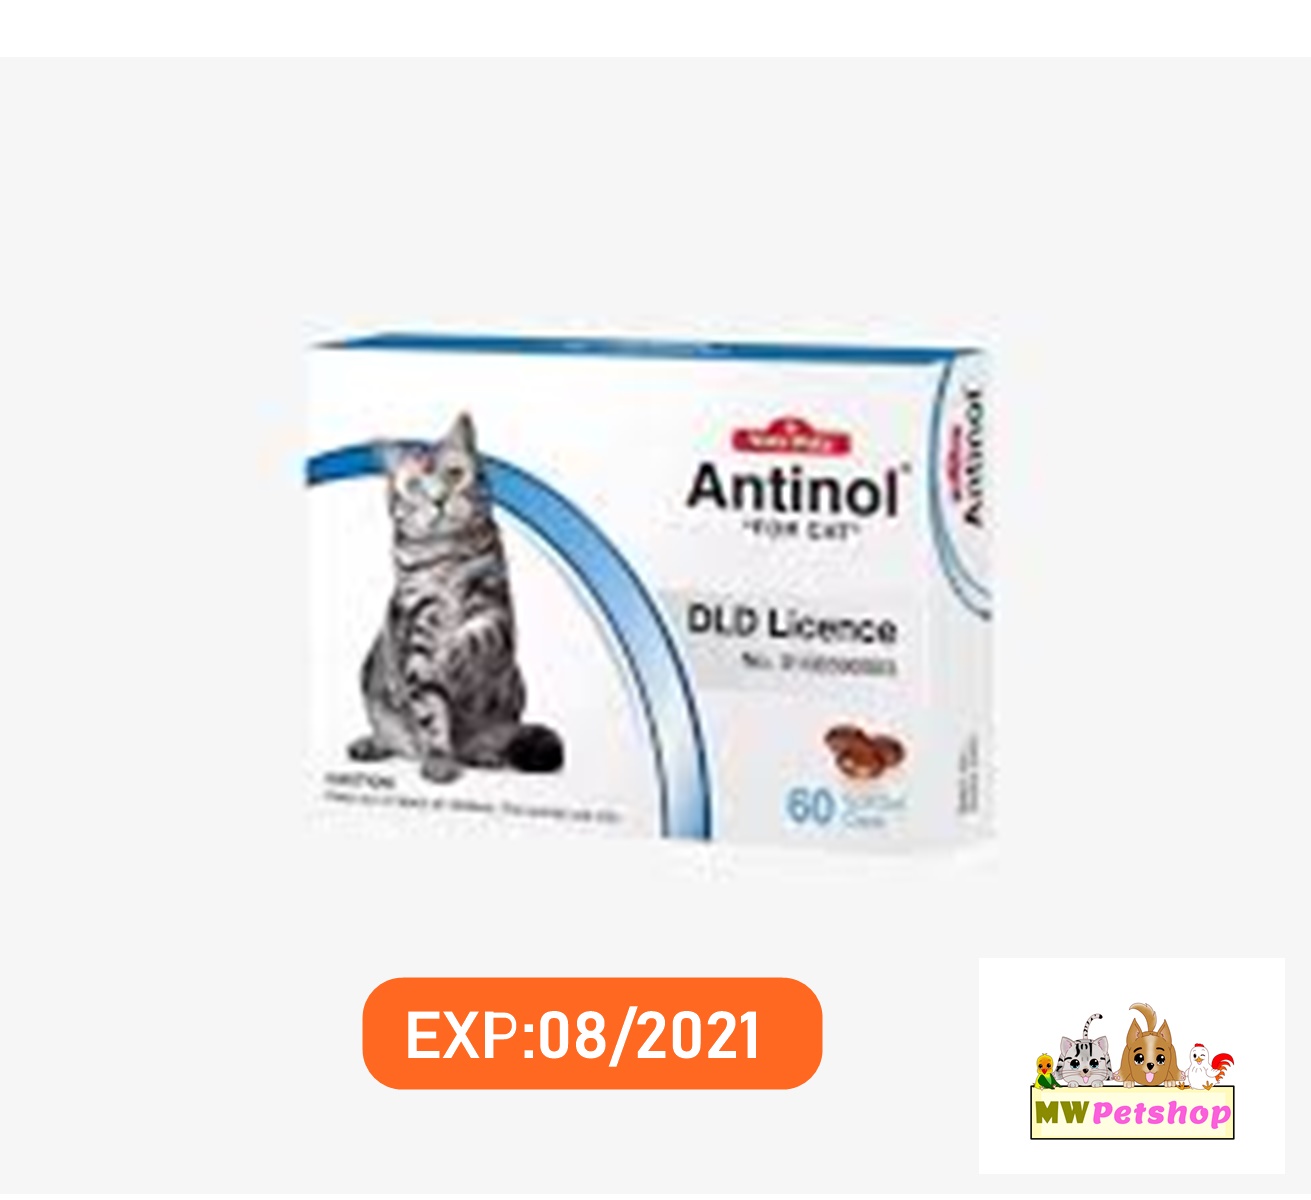 Antinol natural 100�t อาหารเสริม ลดอักเสบ บำรุงข้อ แมว ช่วยลดการระคายเคืองที่ผิวหนัง สารสกัดจากธรรมชาติ 60 caps ( แมว )